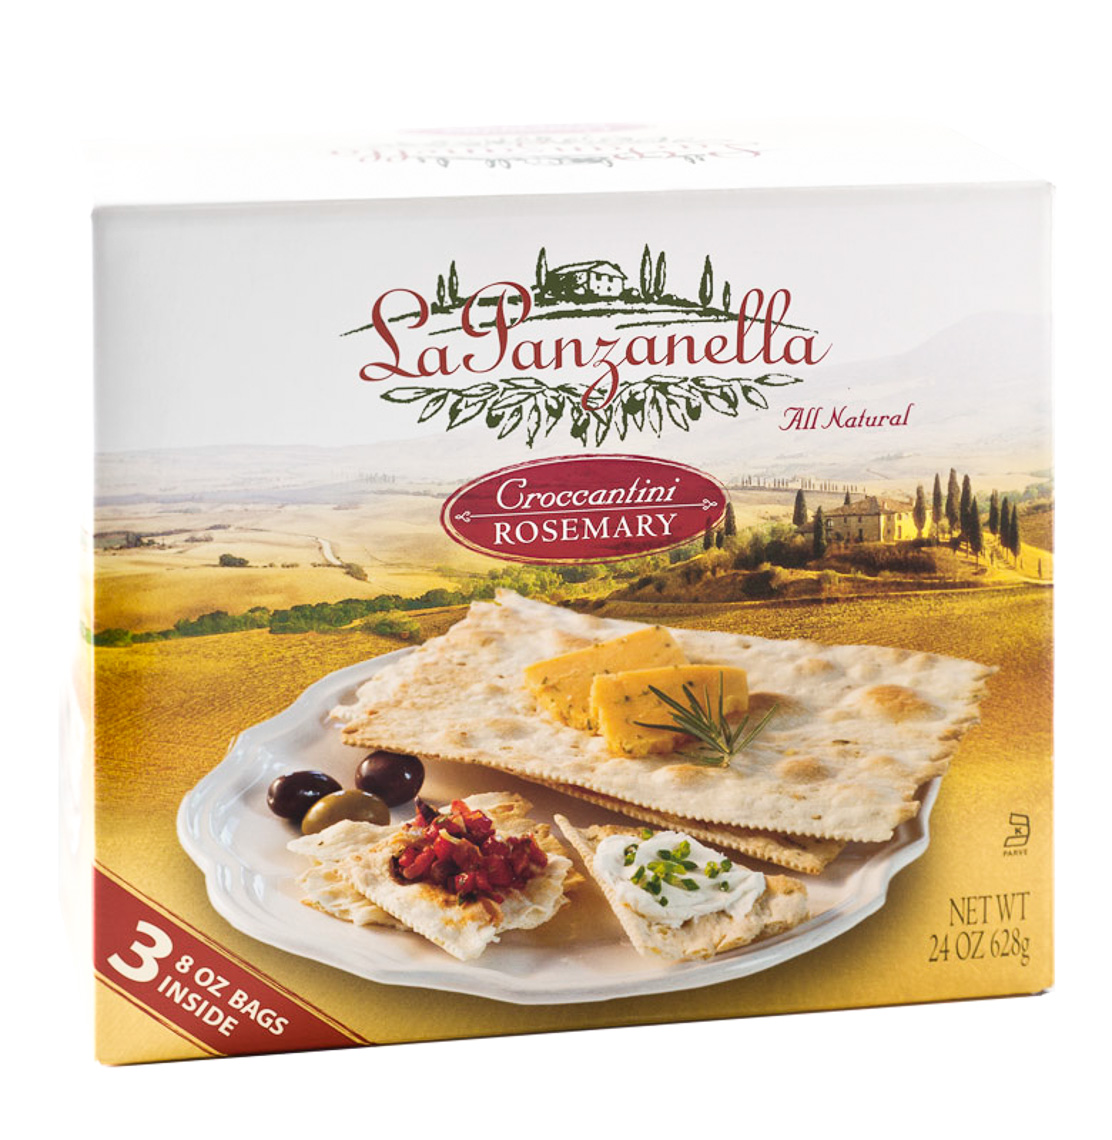 La Panzanella Food Packaging Photography